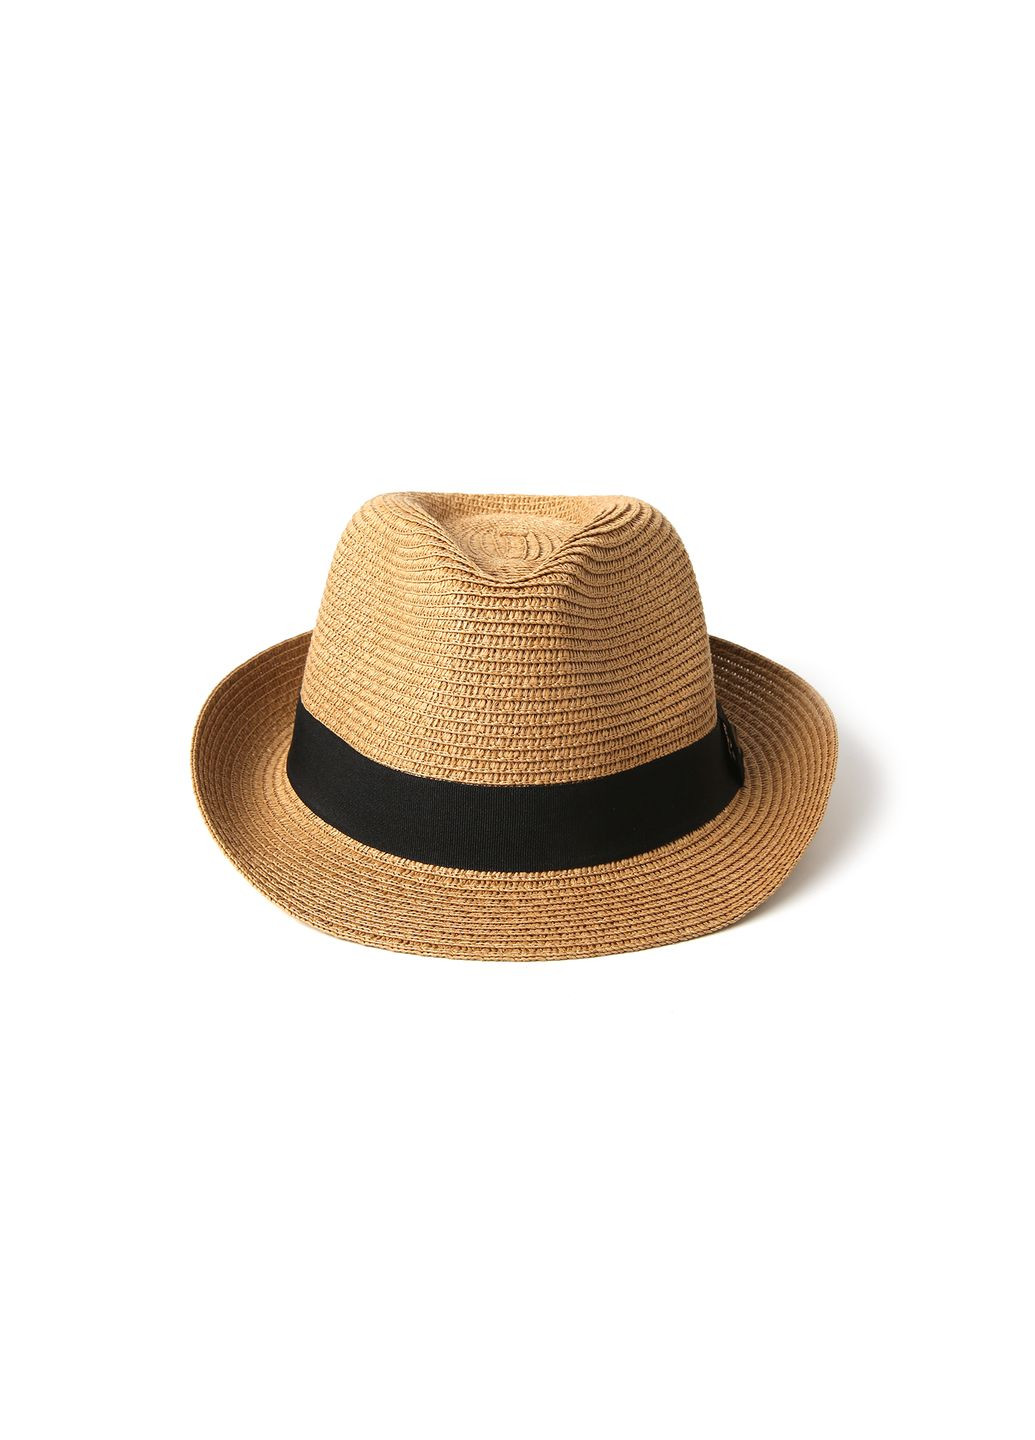 Шляпа трилби мужская бумага бежевая JOYCE 844-071 LuckyLOOK 844-071m (280913852)